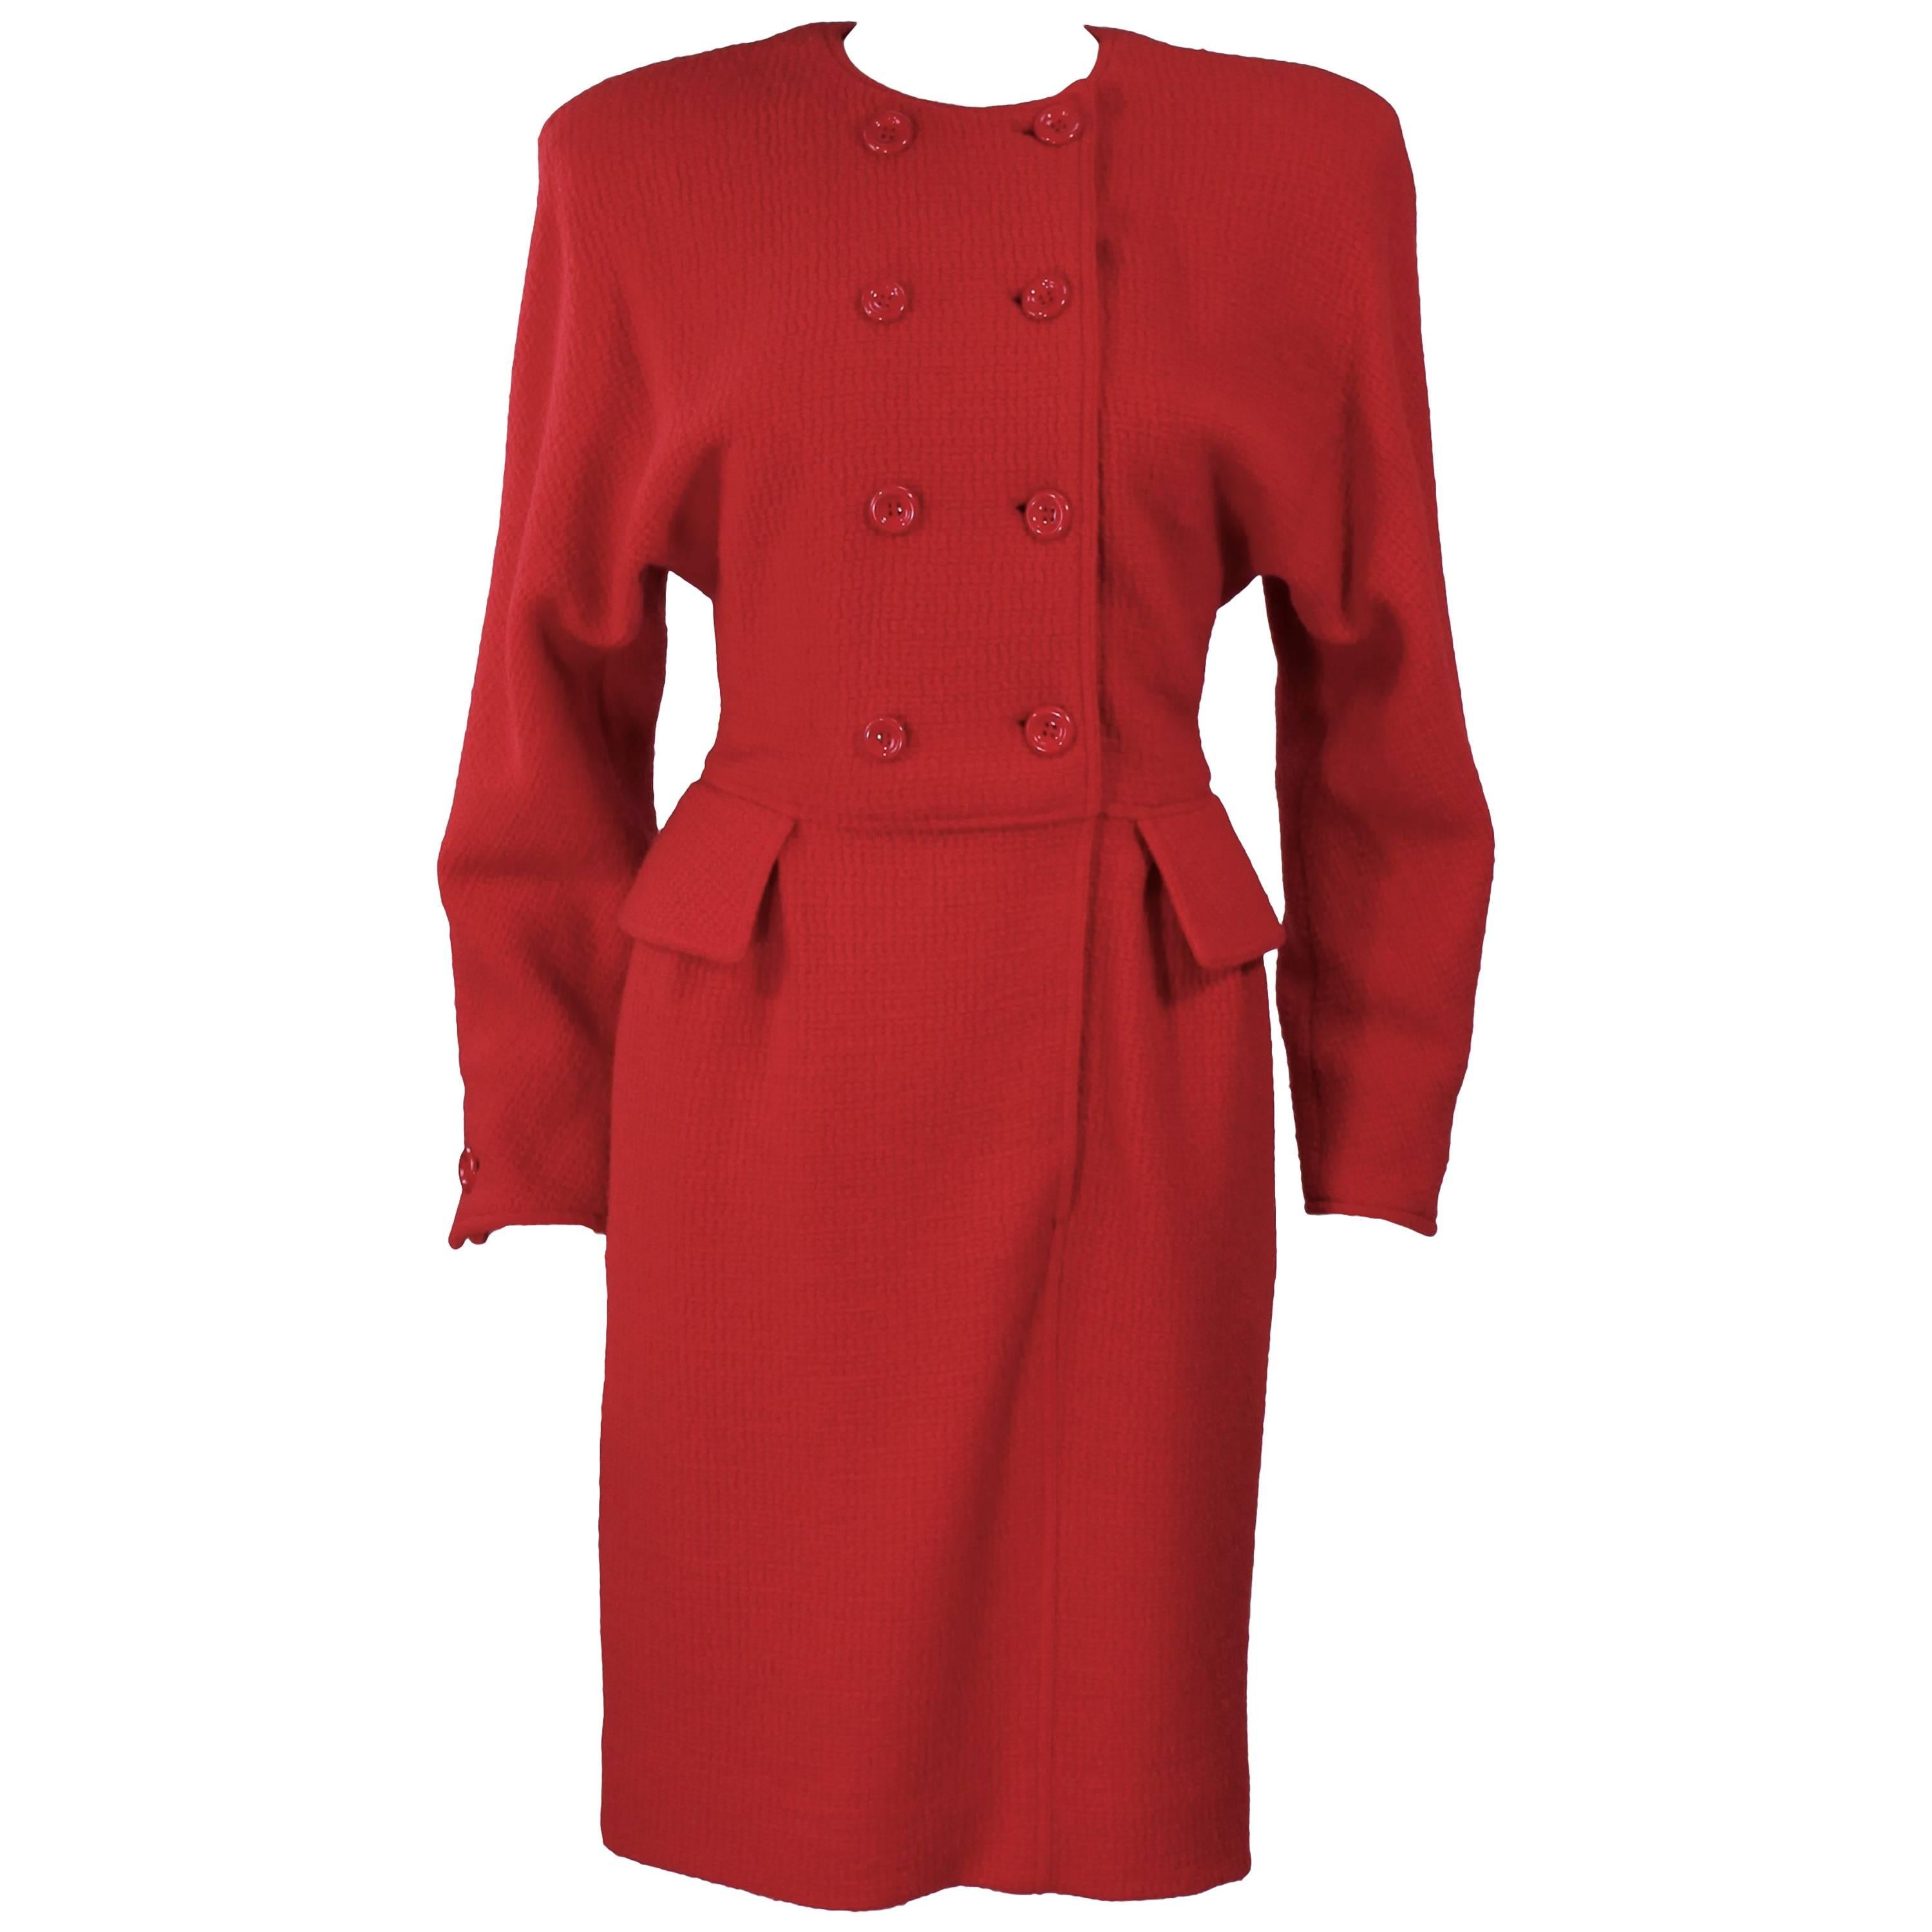 VALENTINO Red Wool Dress Size 6-8